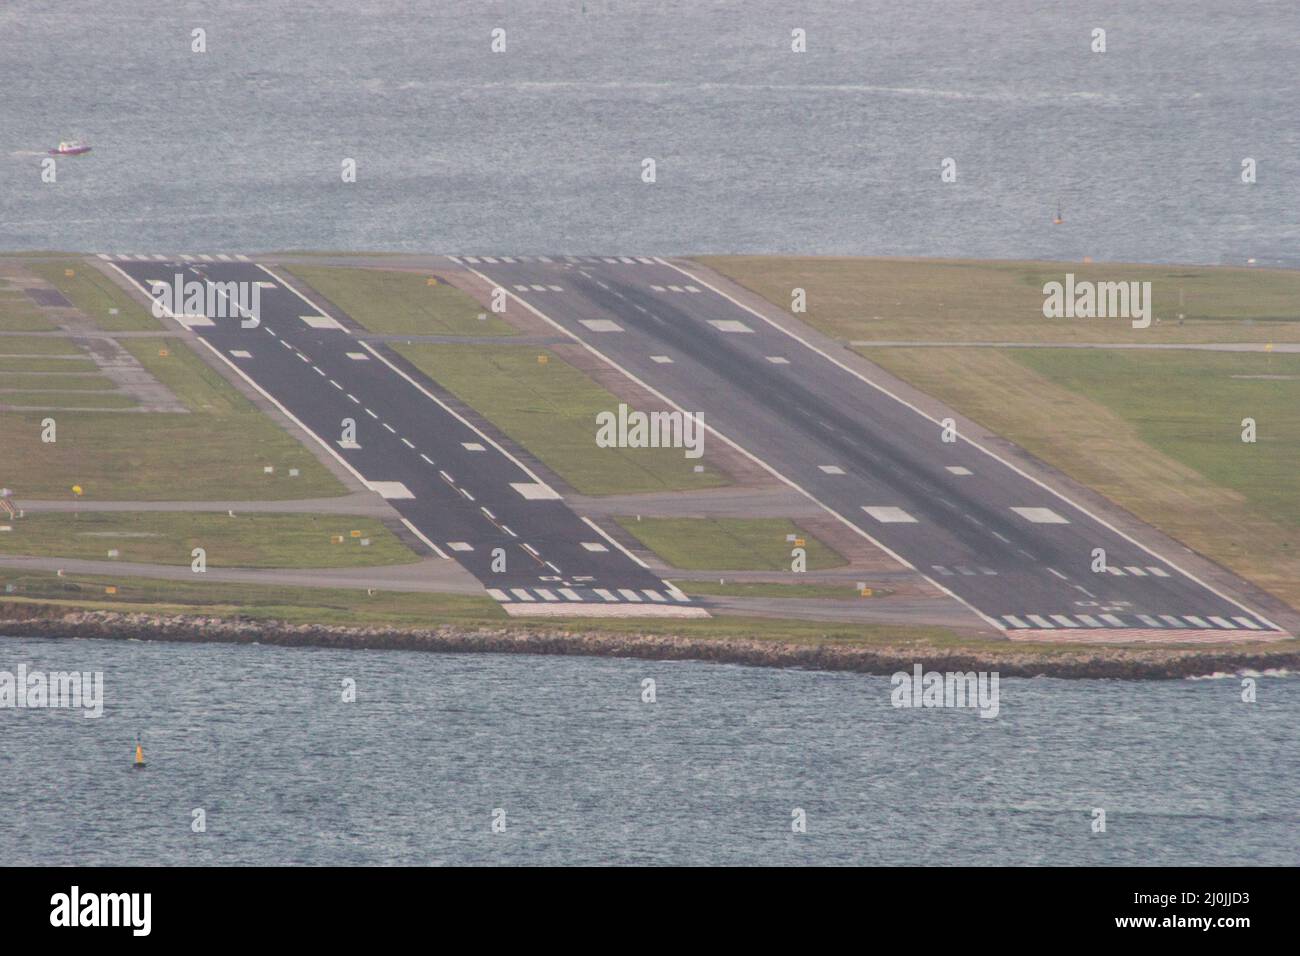 runway at Santos Dumont Airport in Rio de Janeiro, Brazil. Stock Photo